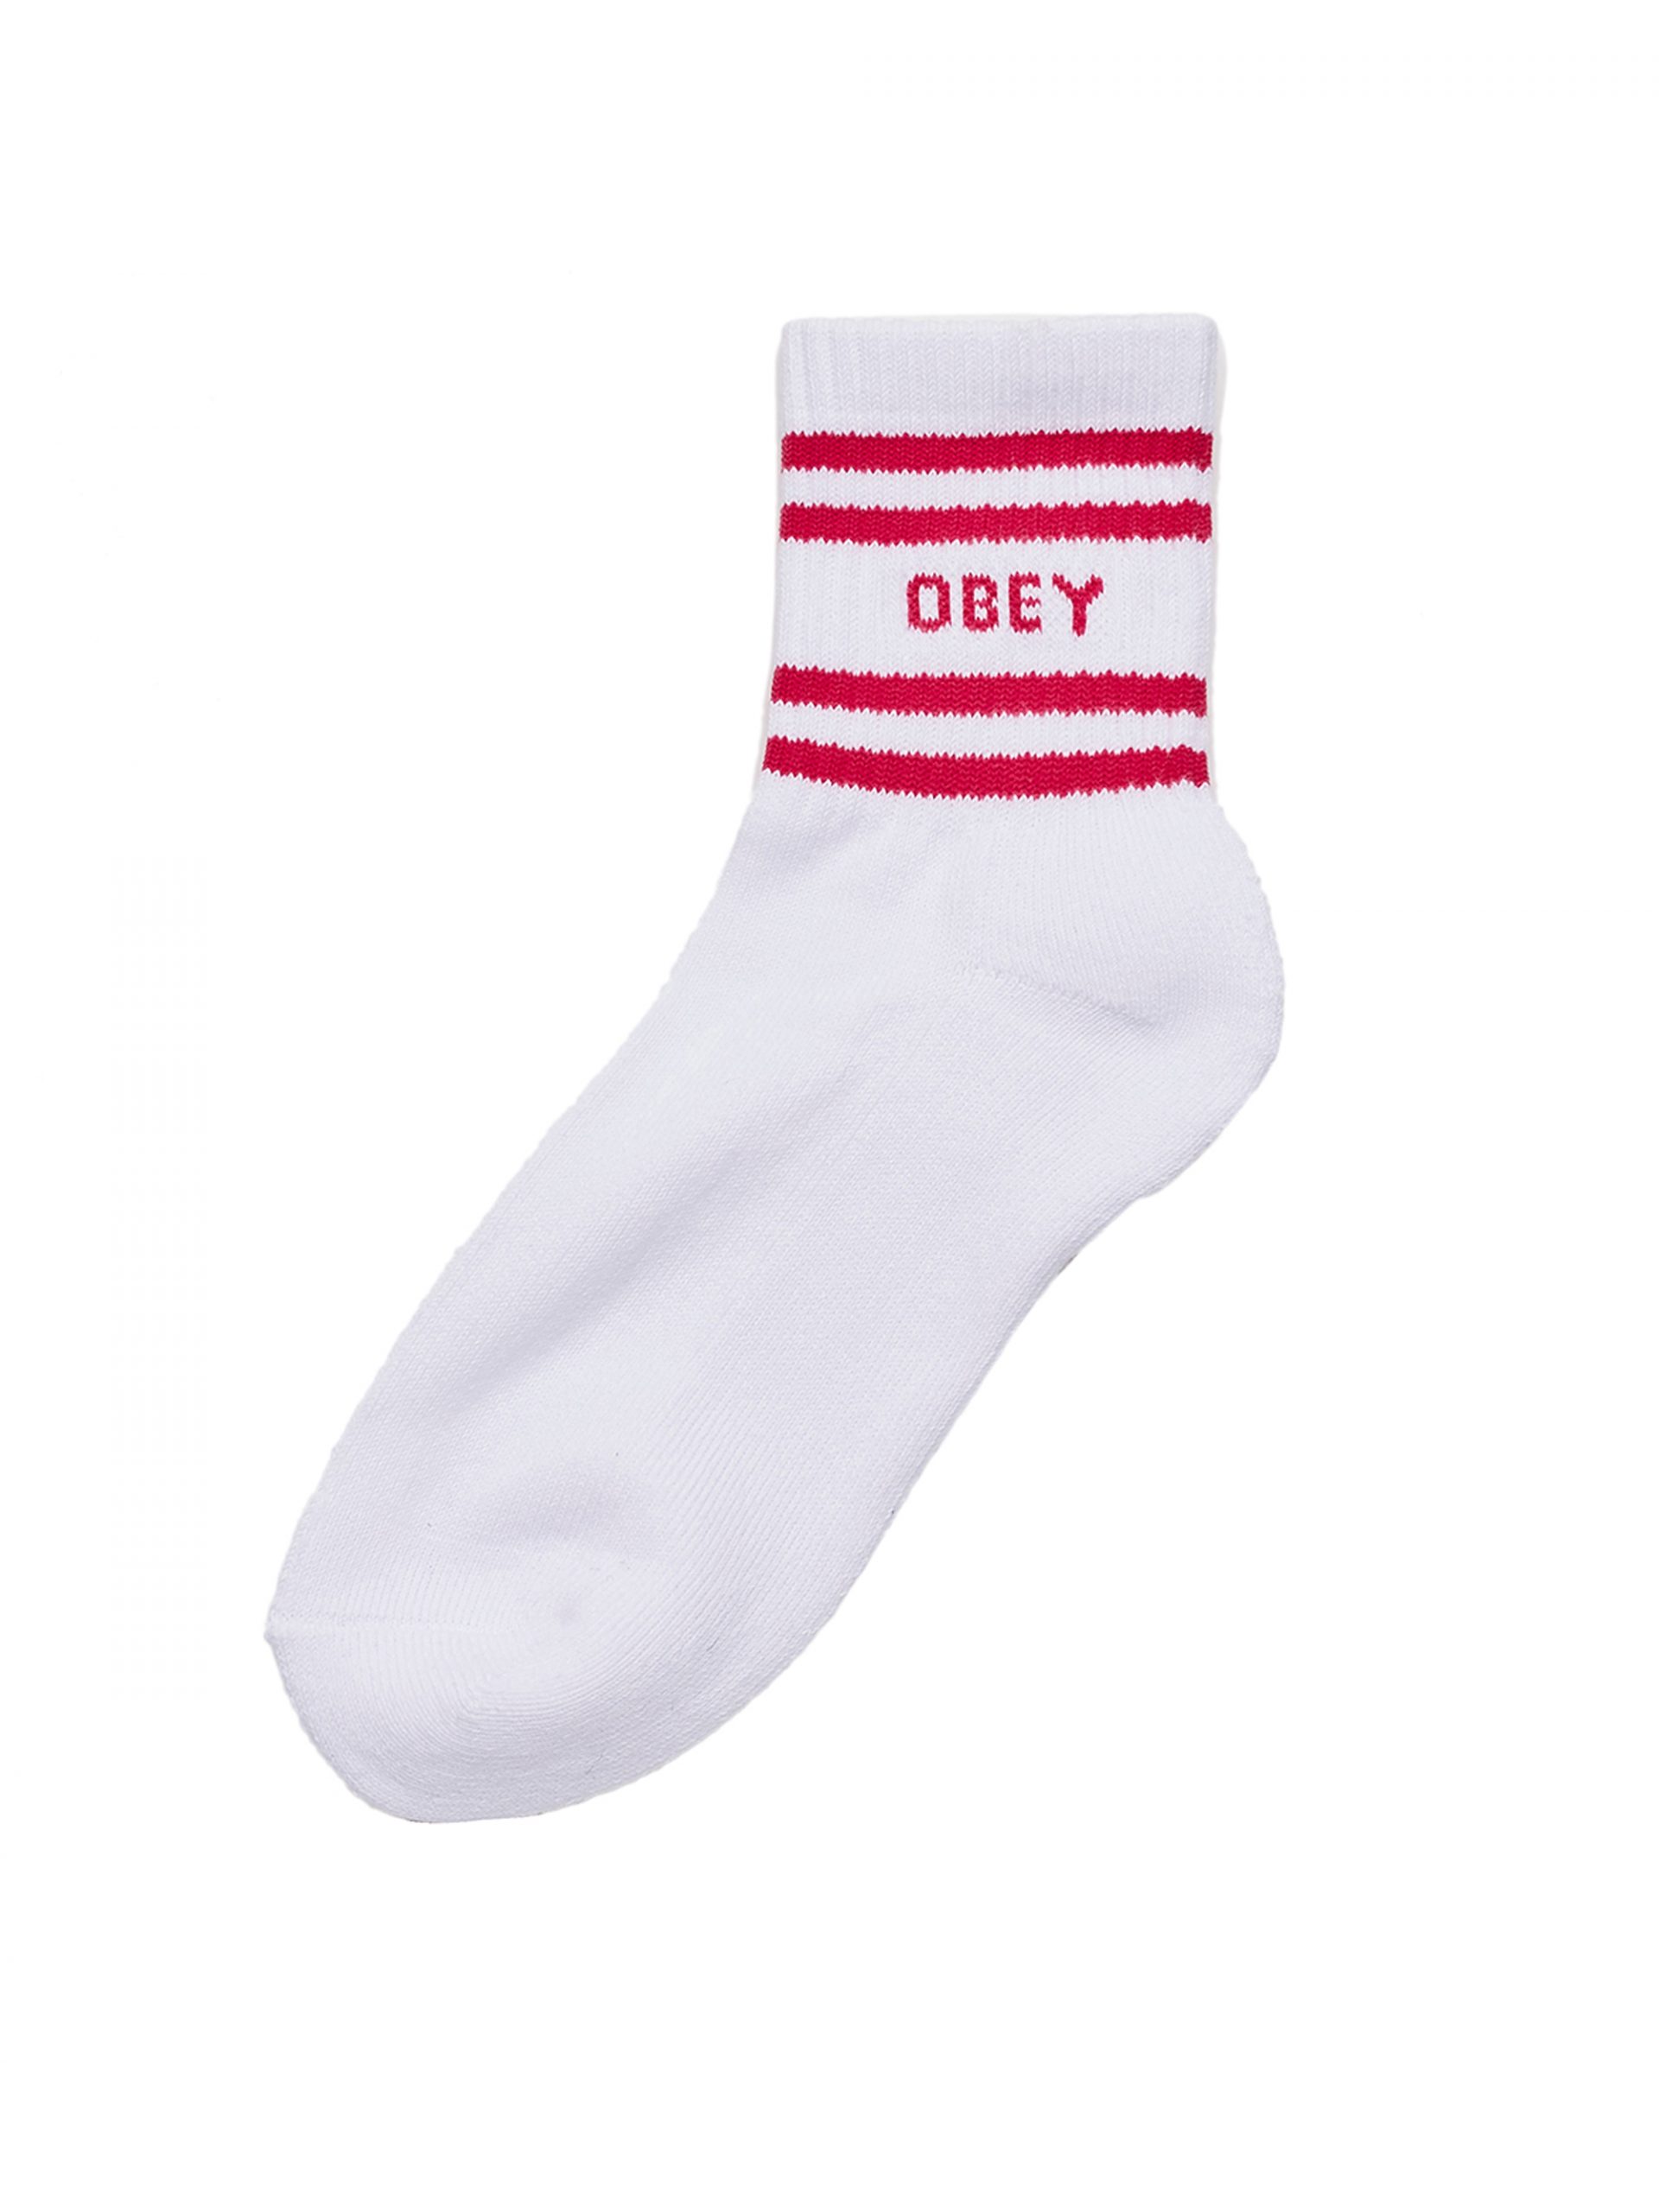 Coop Sock - Obey Clothing UK